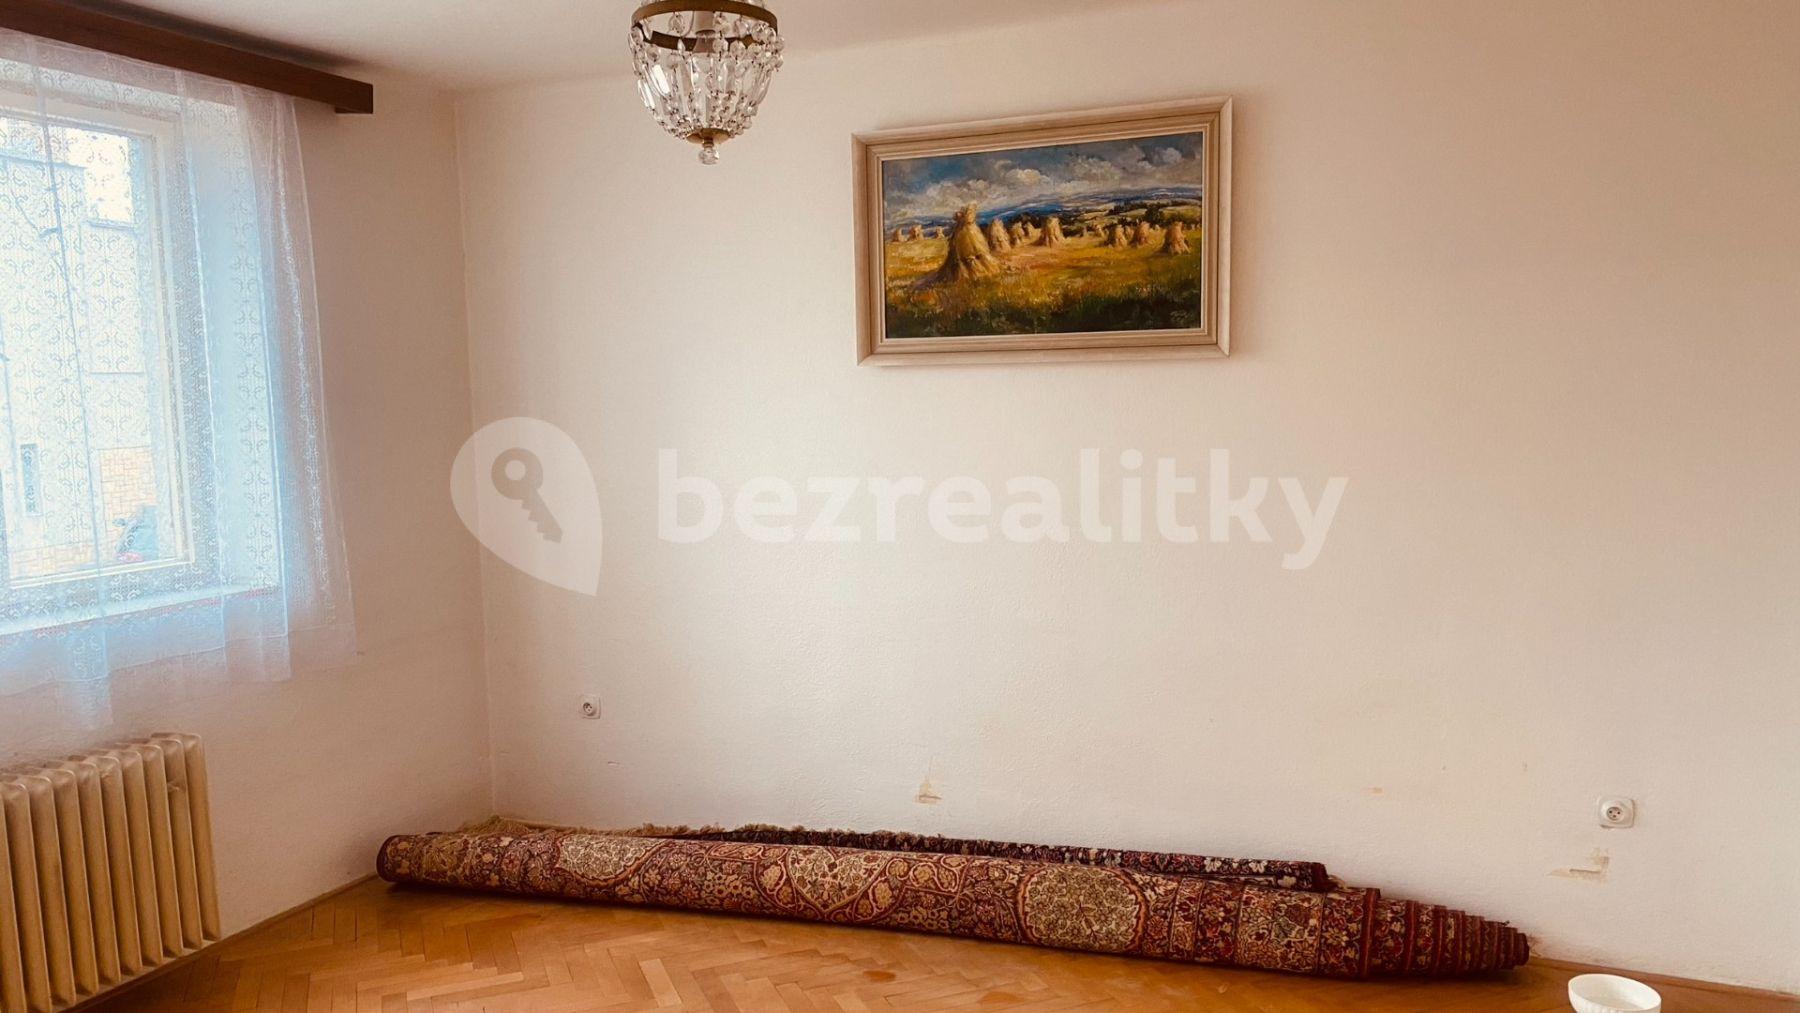 Prodej domu 285 m², pozemek 914 m², Fügnerova, Jihlava, Kraj Vysočina